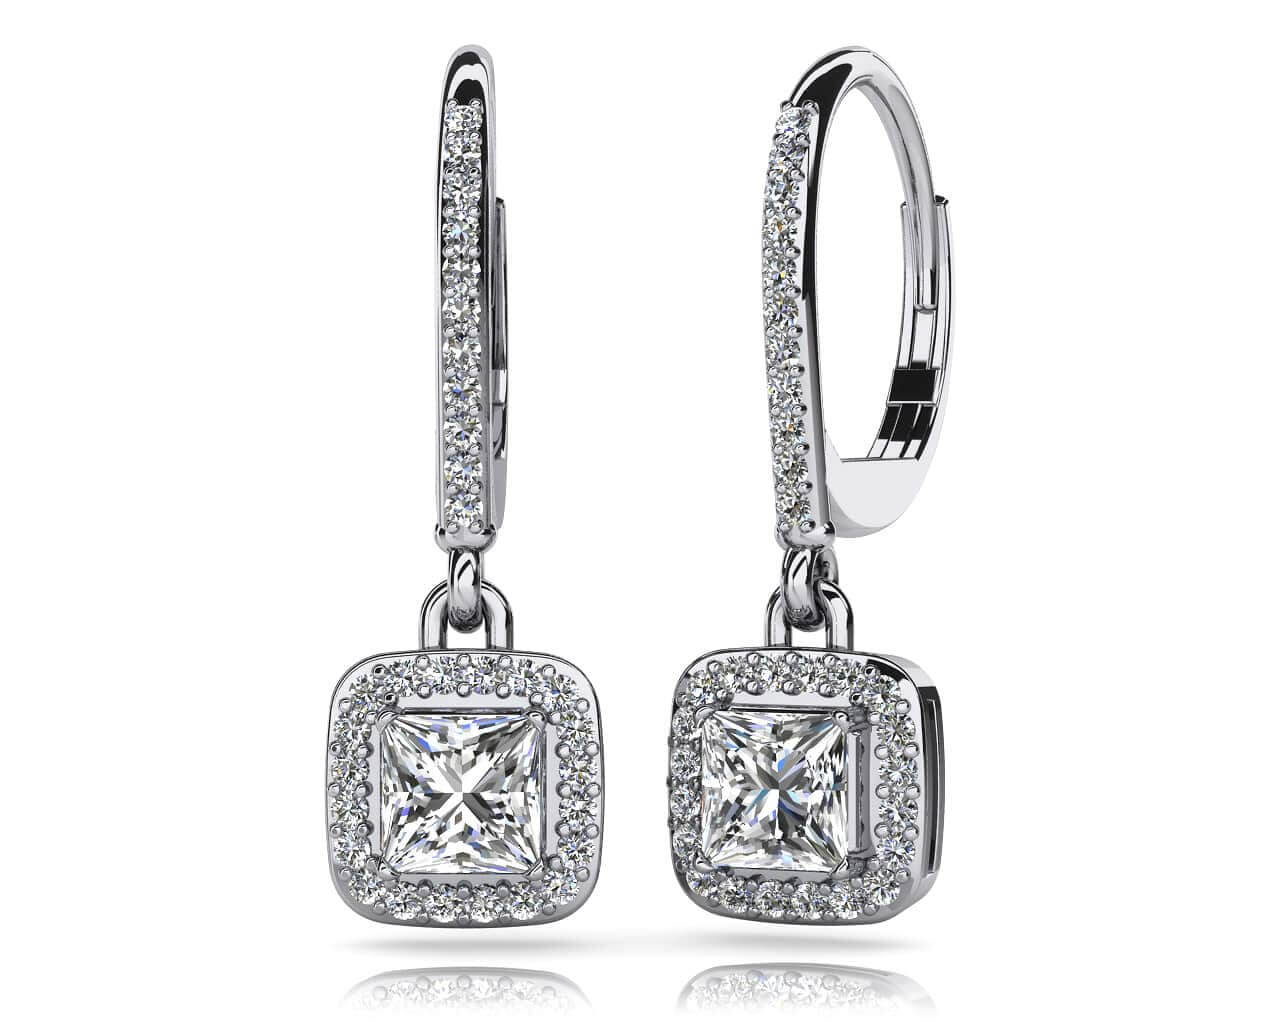 Princess Cut Diamond Allure Earrings 1.09 Carat Total Weight